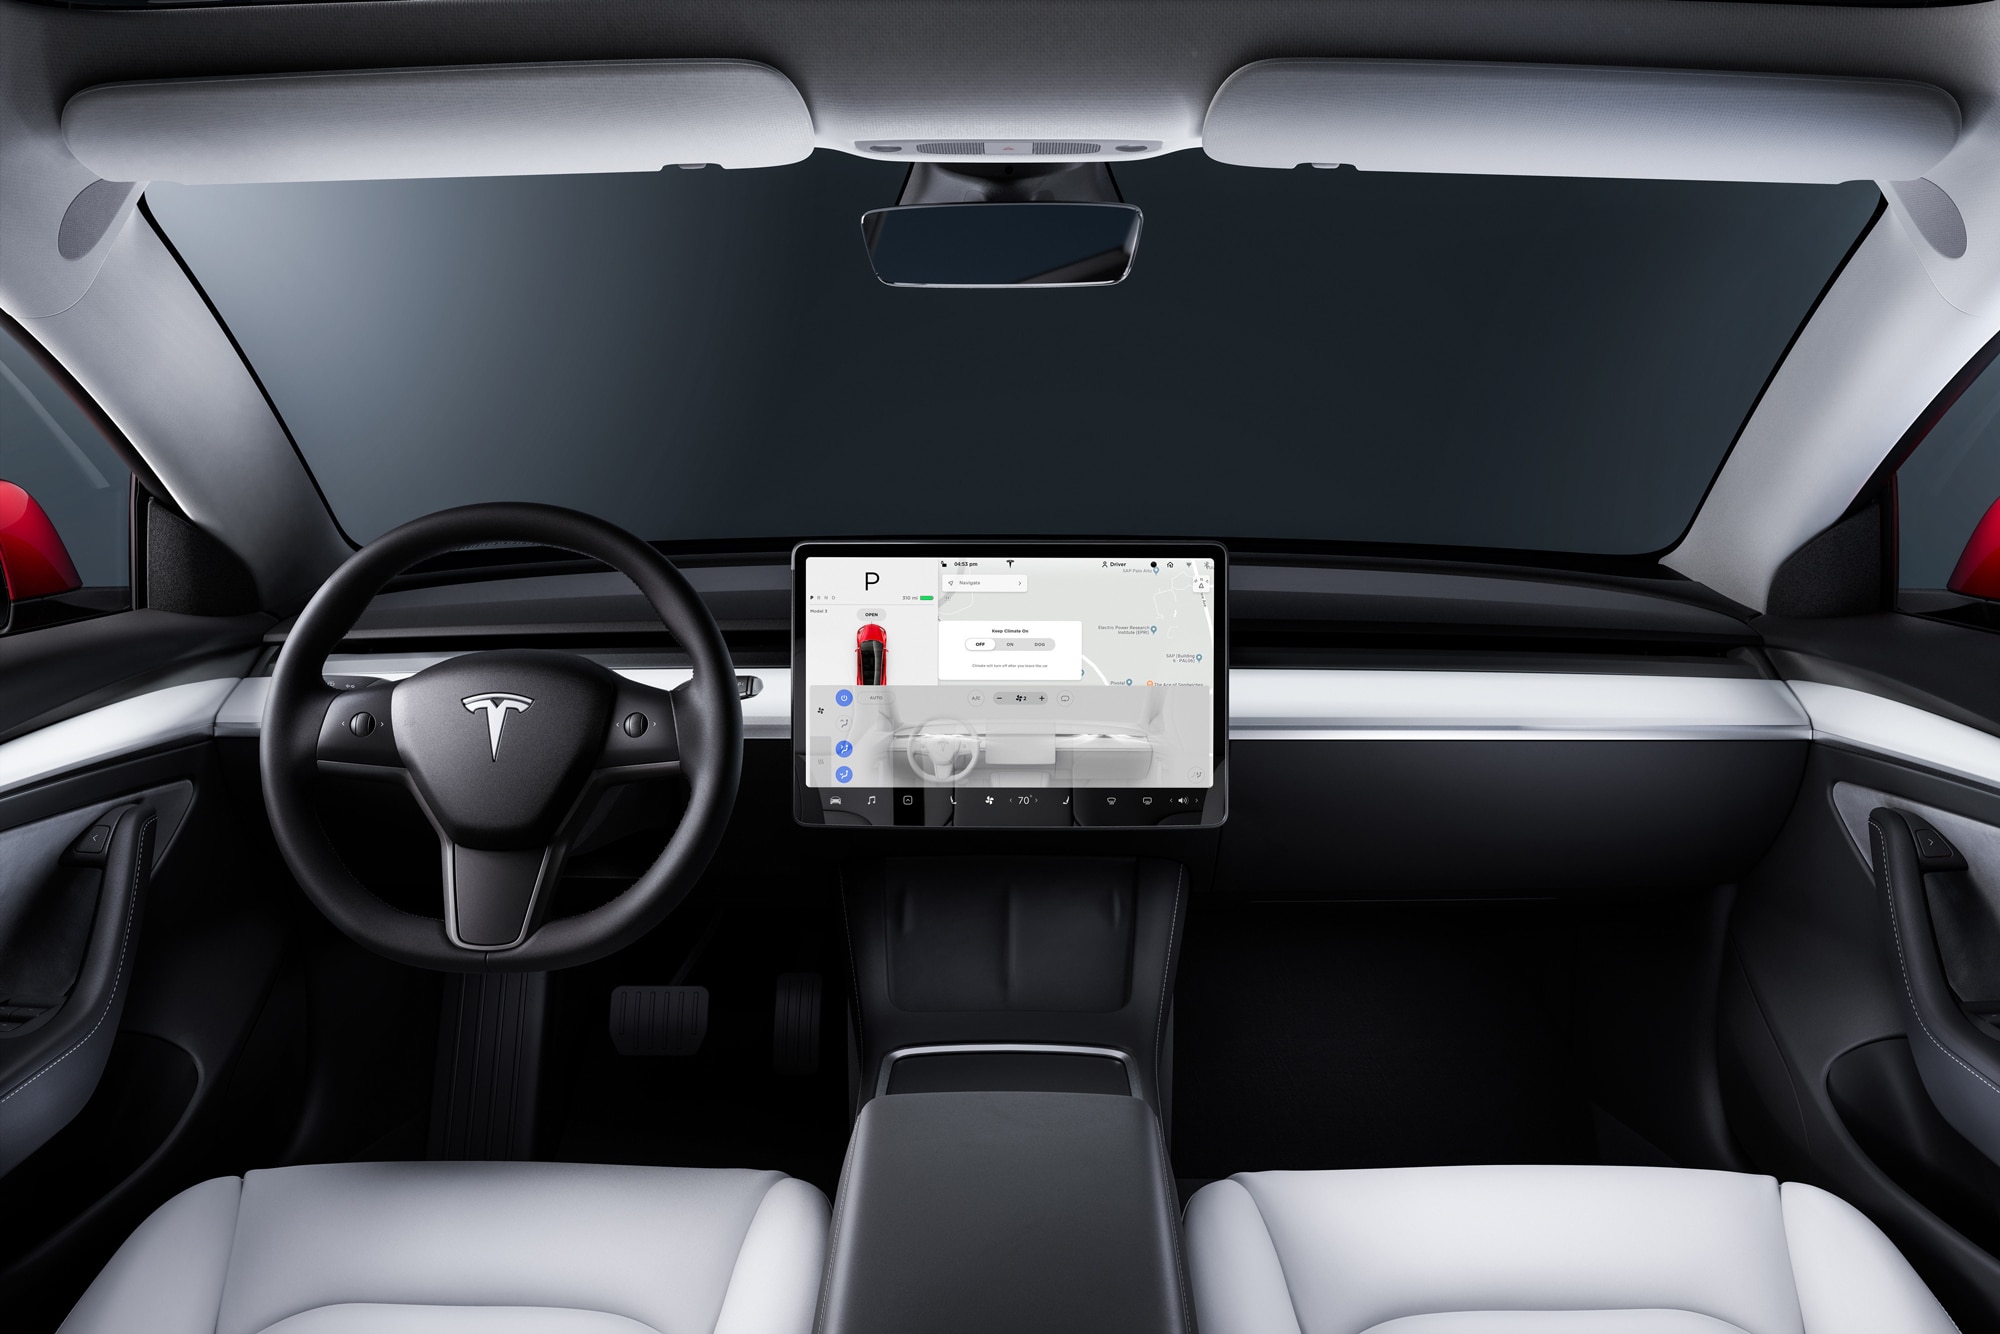 Tesla Model 3 infotainment system showing OTA update